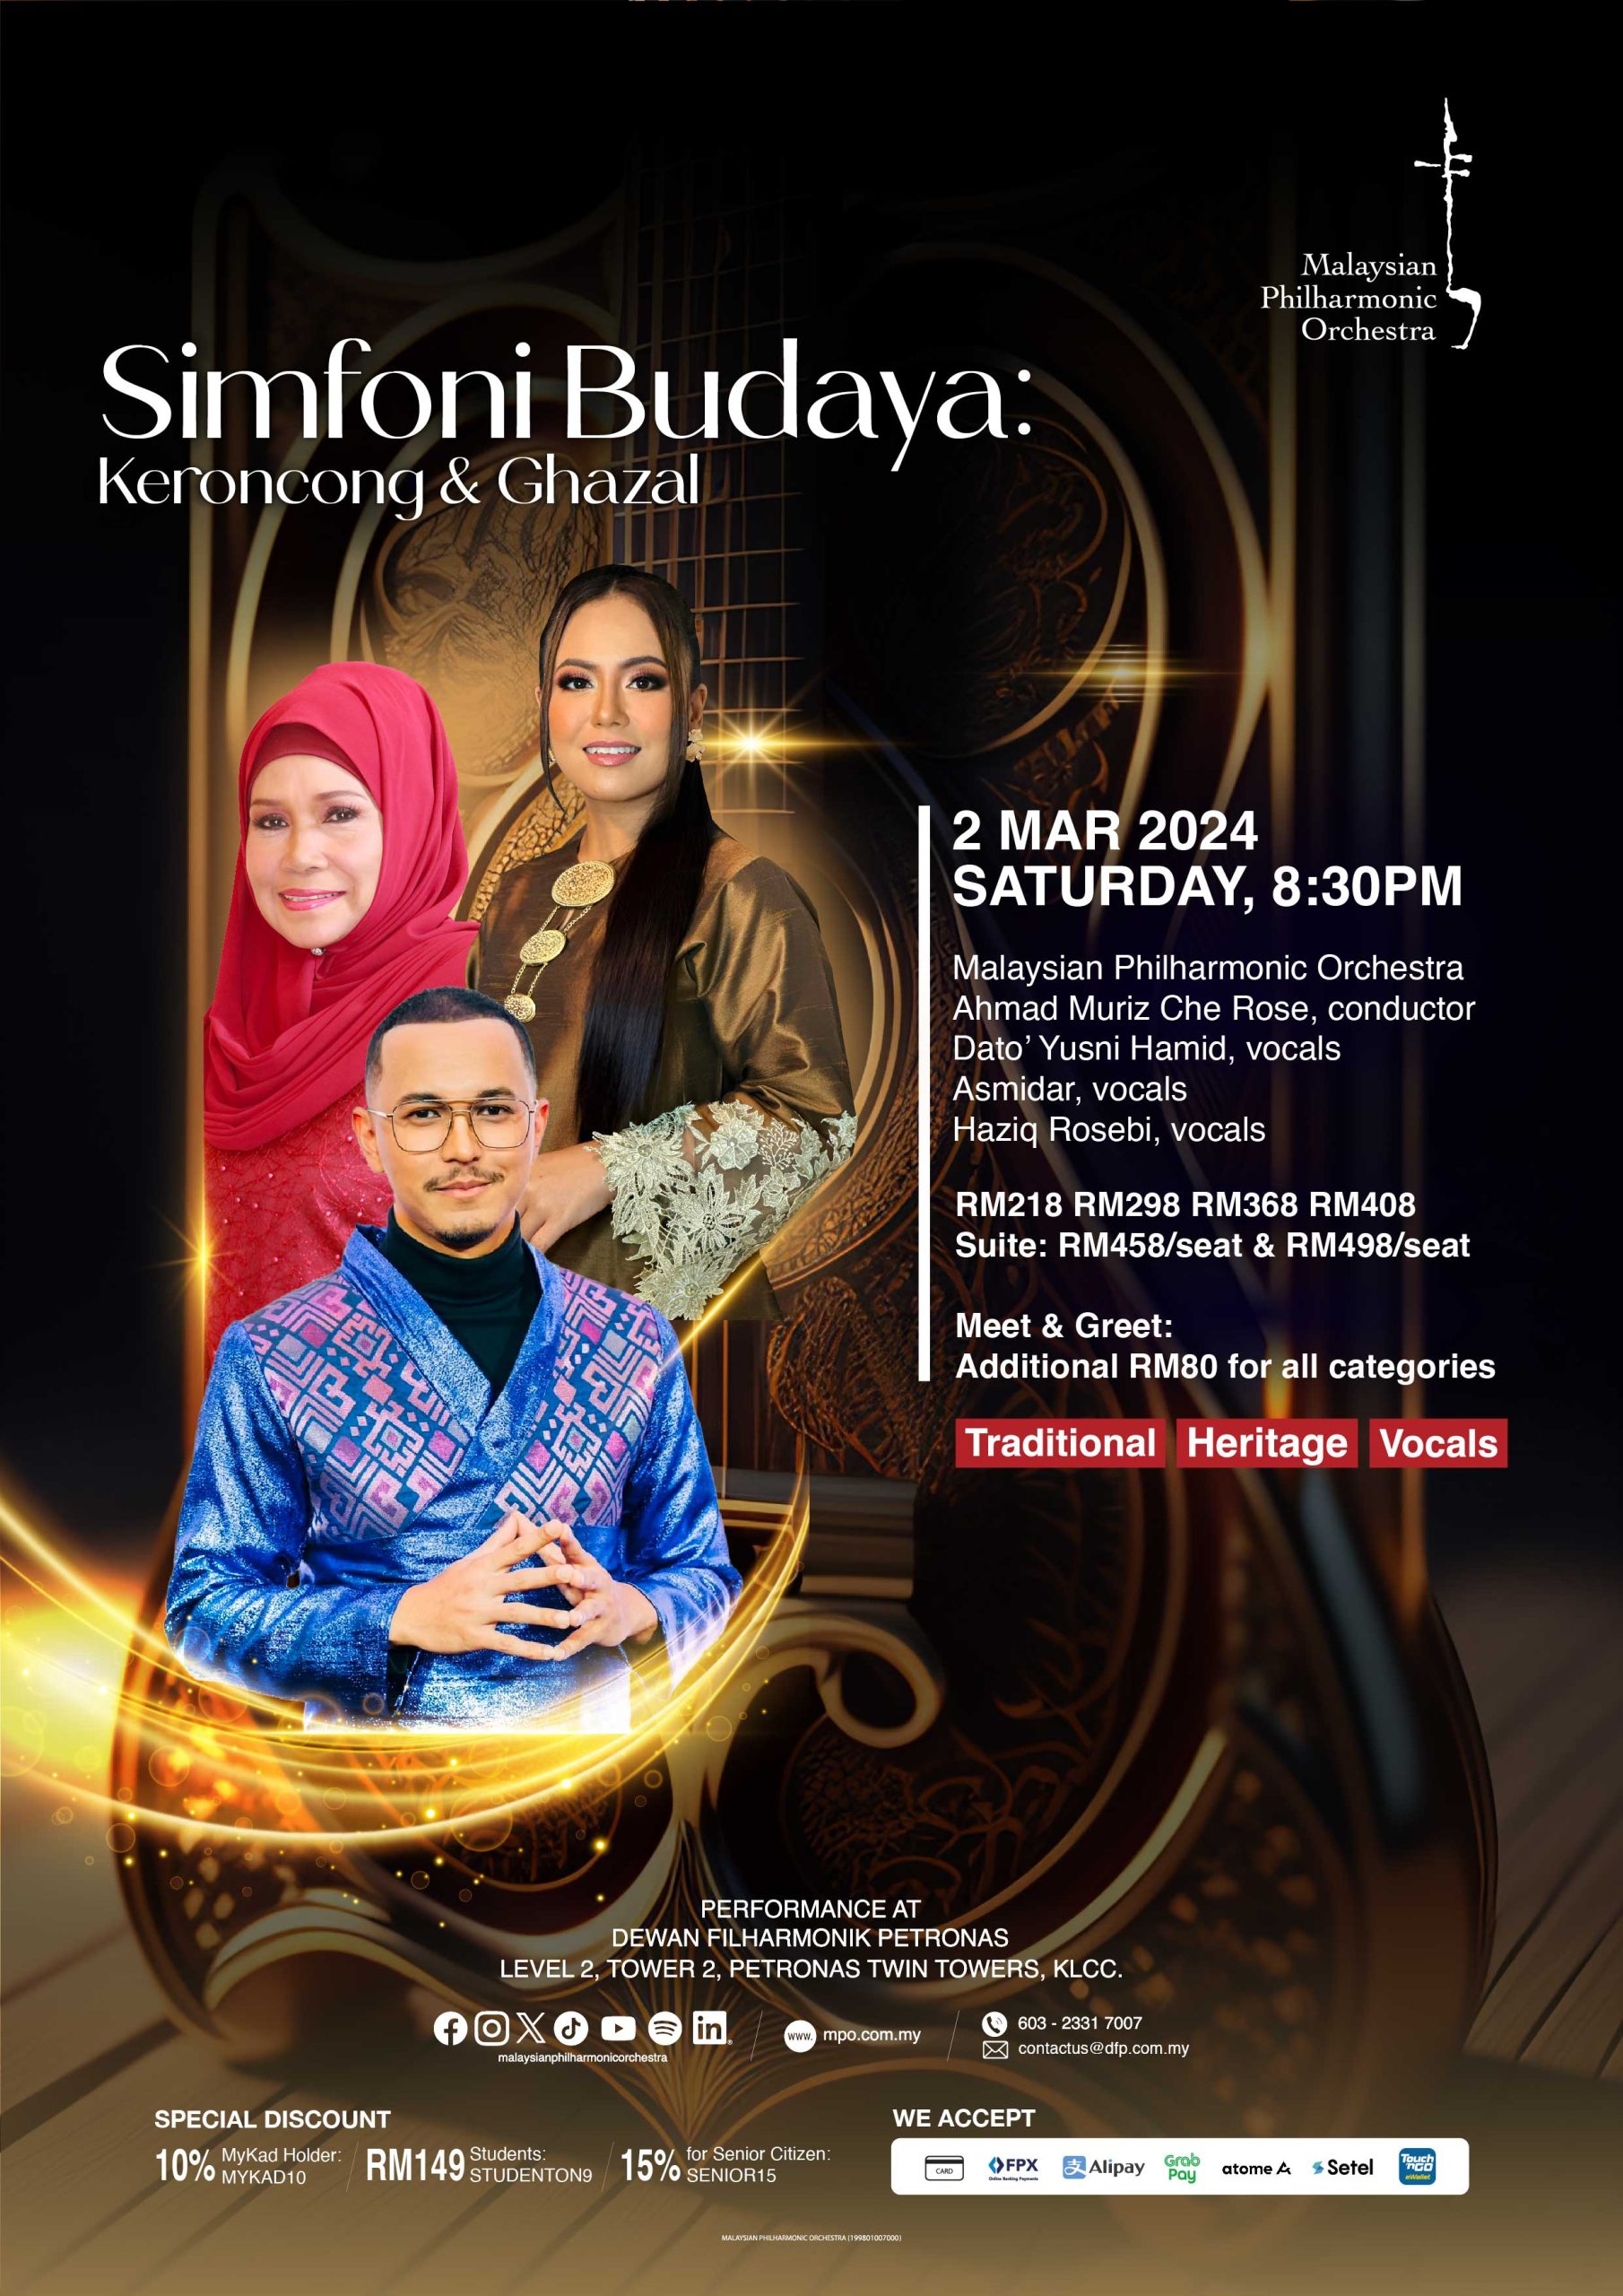 Simfoni Budaya: Keroncong & Ghazal at Malaysian Philharmonic Orchestra